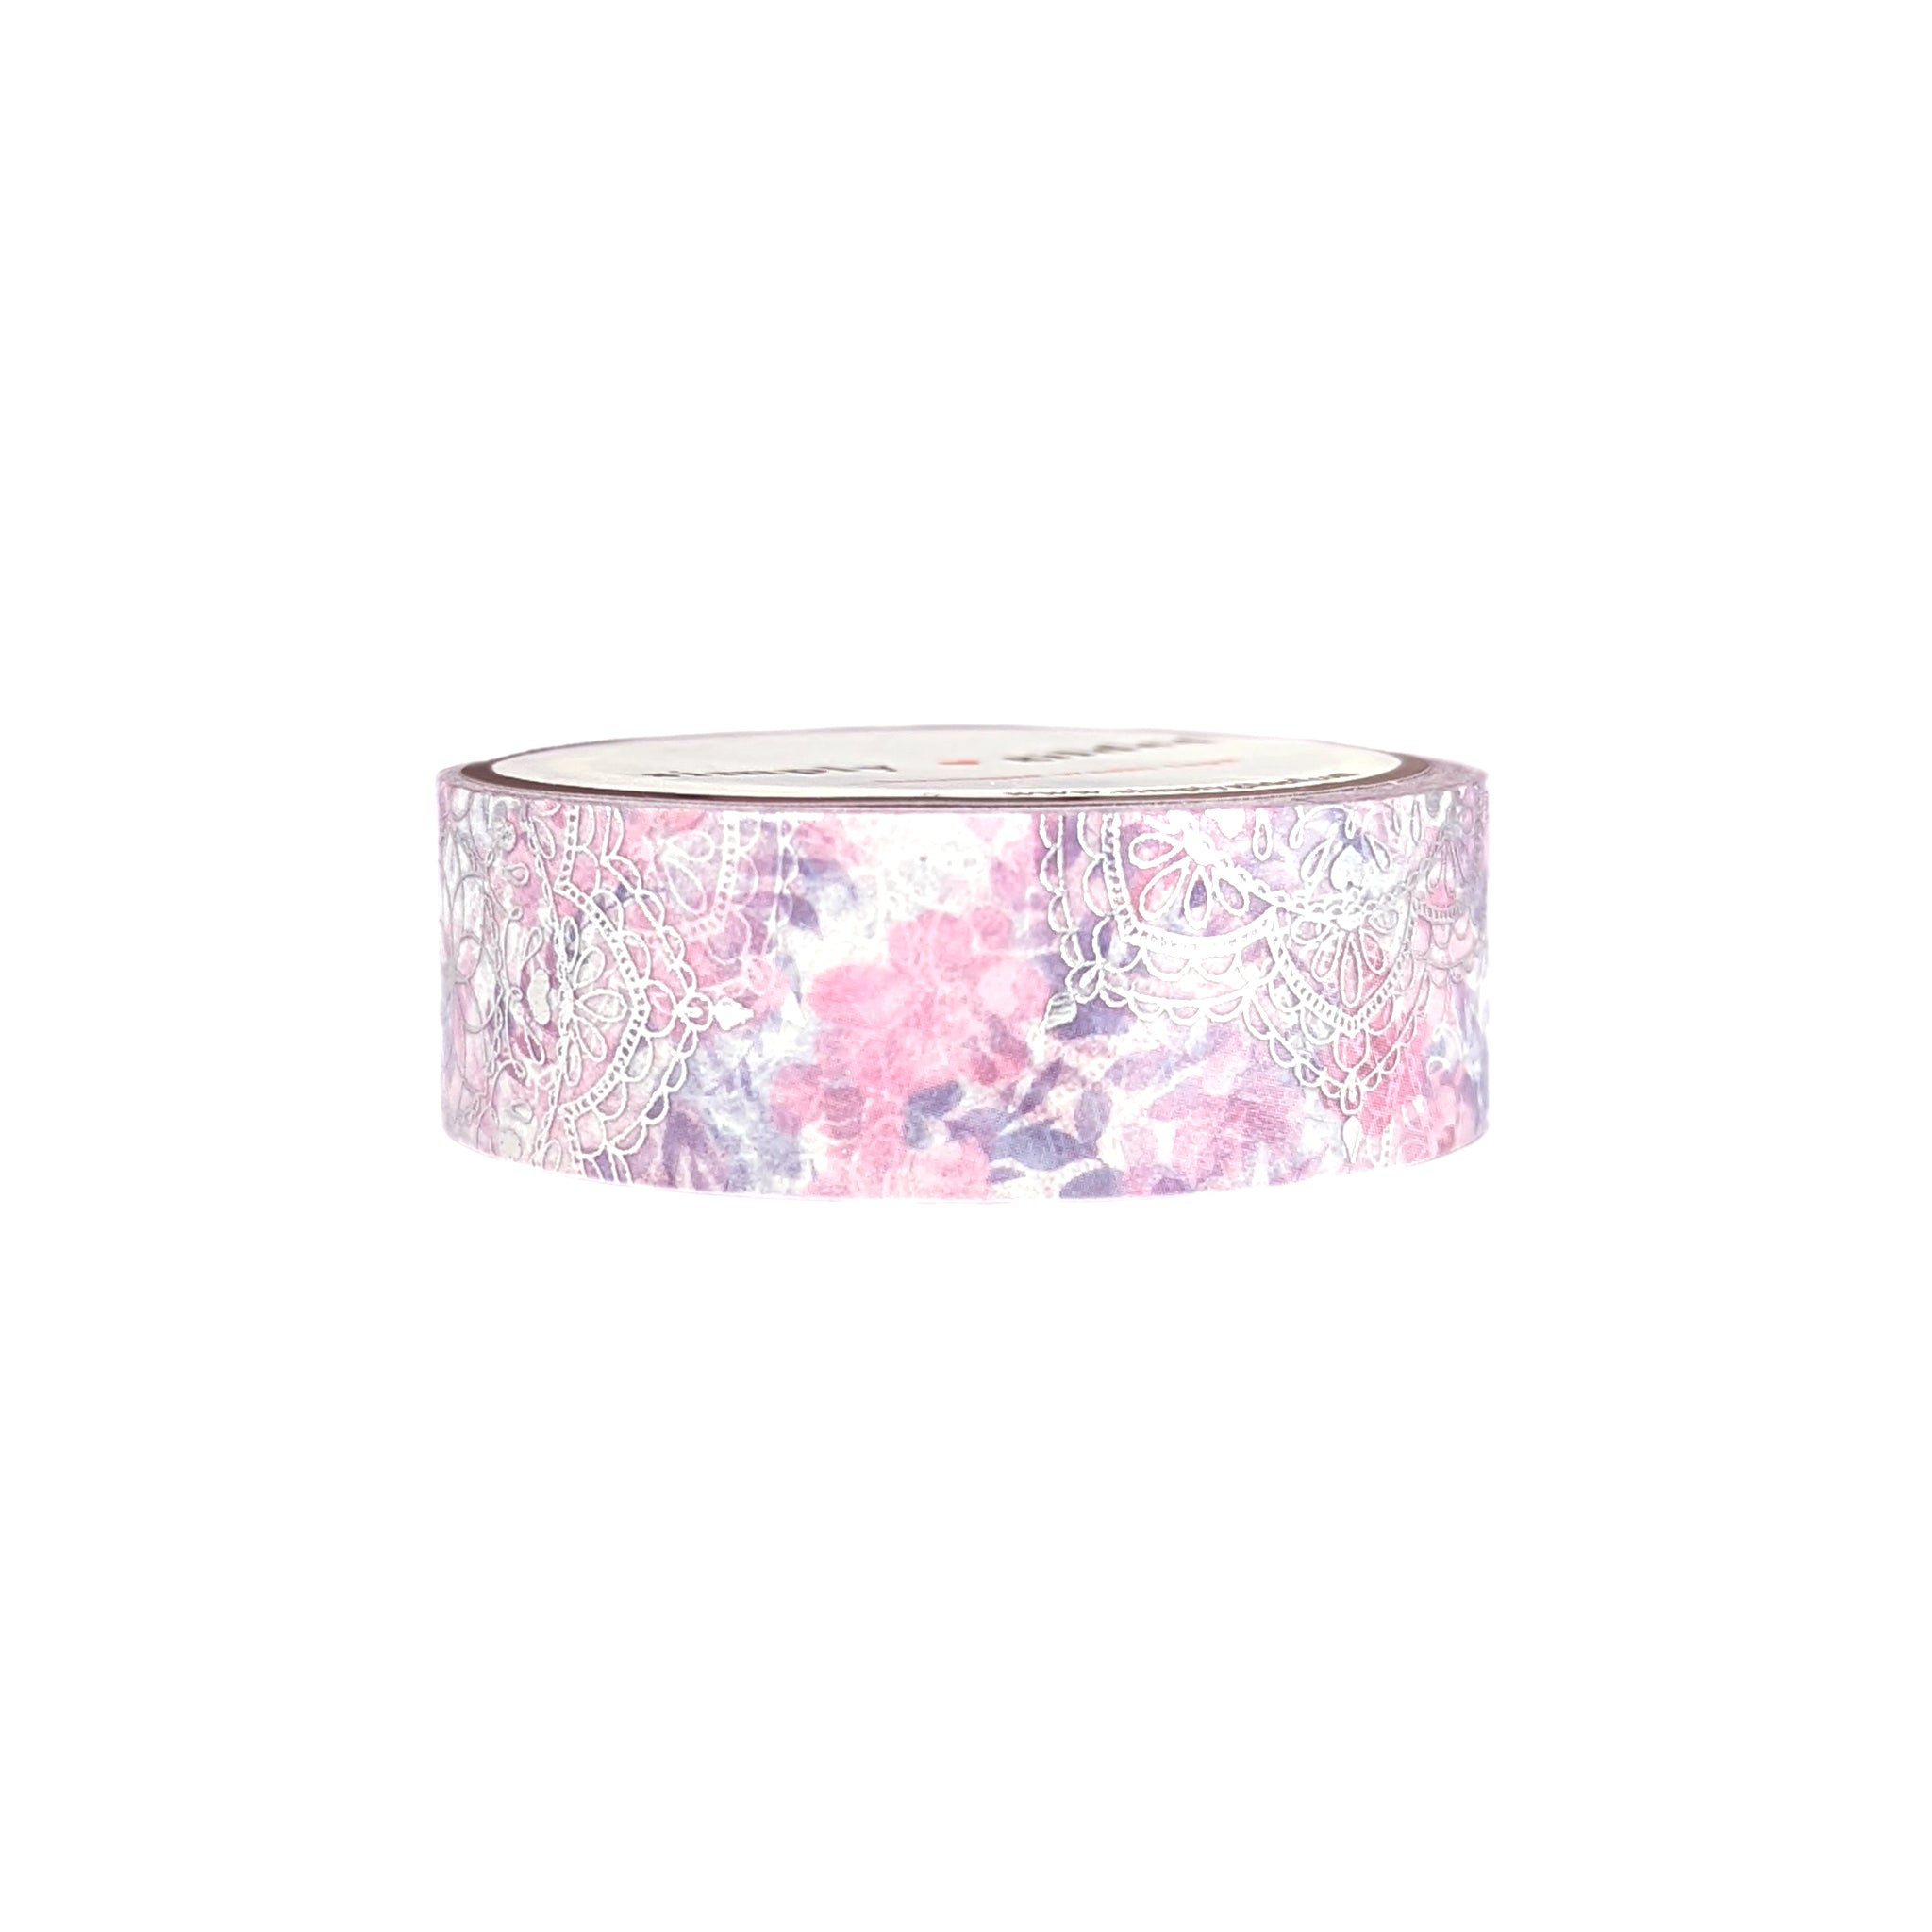 Princess Purple Stardust washi set (15/10mm + pink / aurora pink foil)